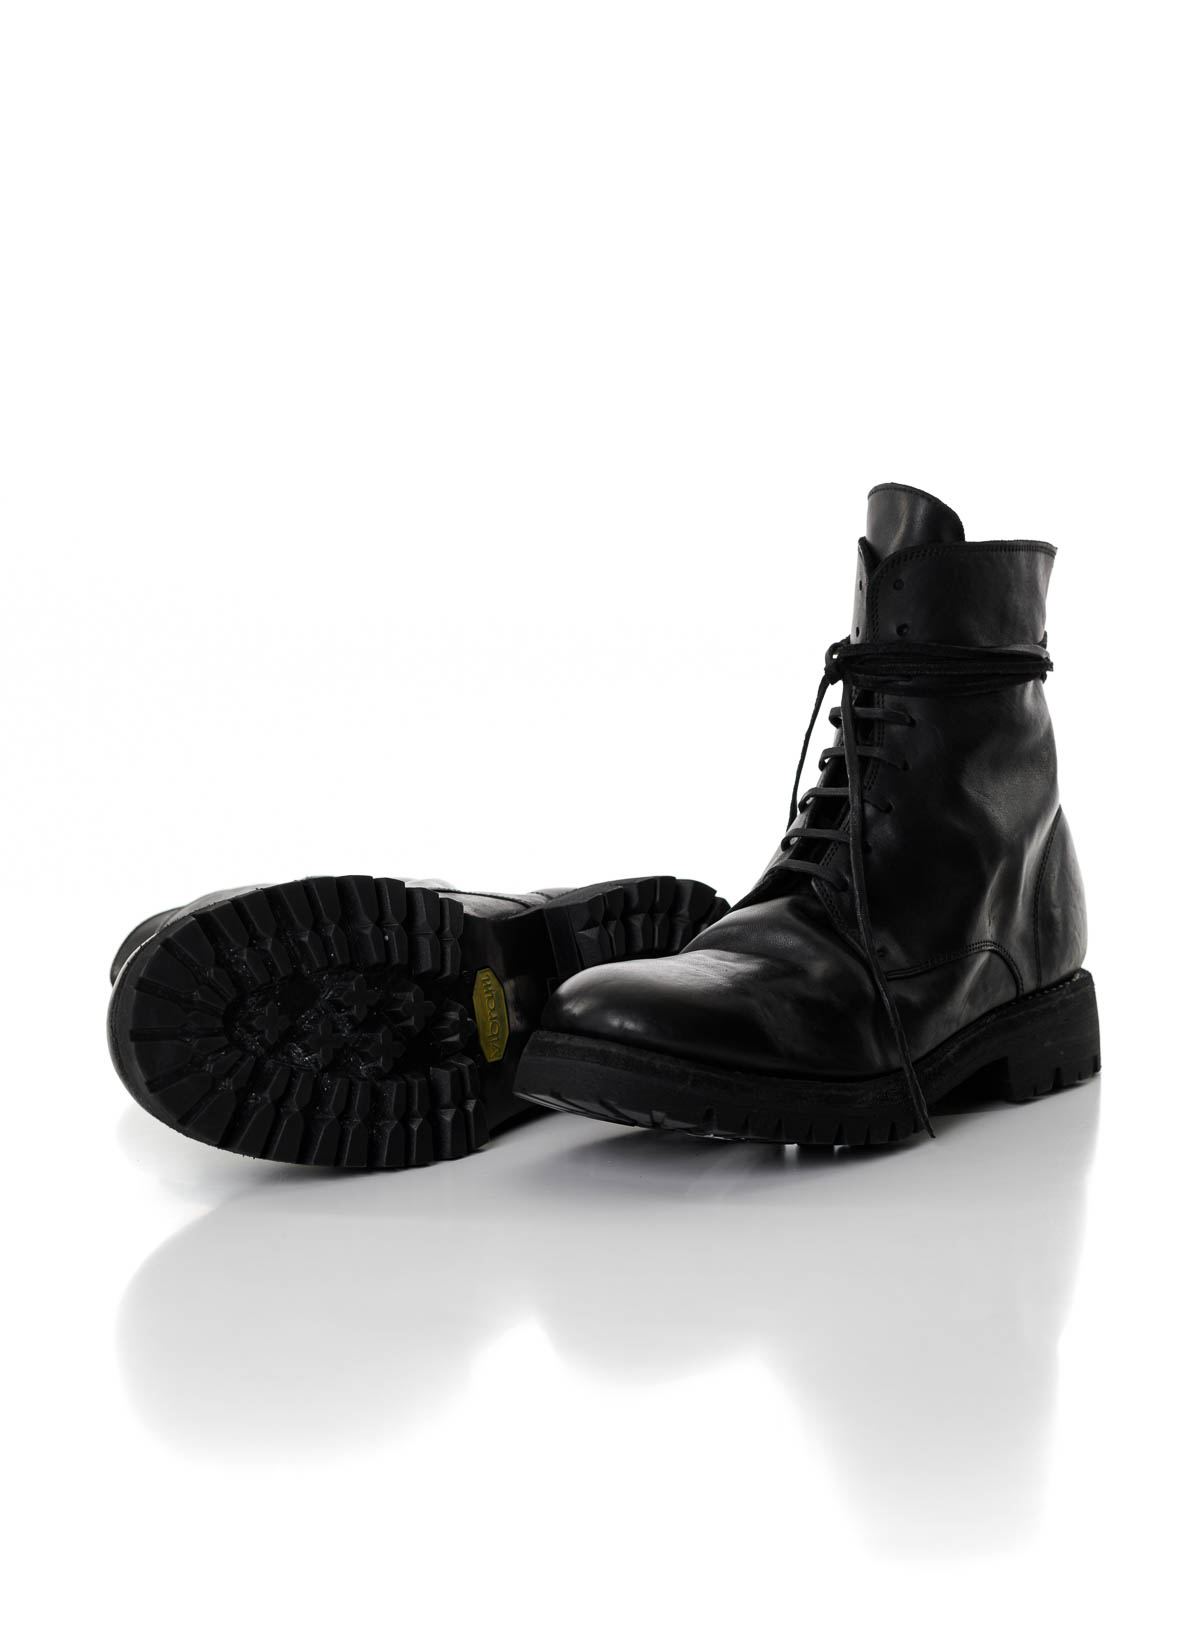 Verwaand Patriottisch omvatten hide-m | GUIDI 795V Lace Up Boot With Vibram Sole, black horse leather